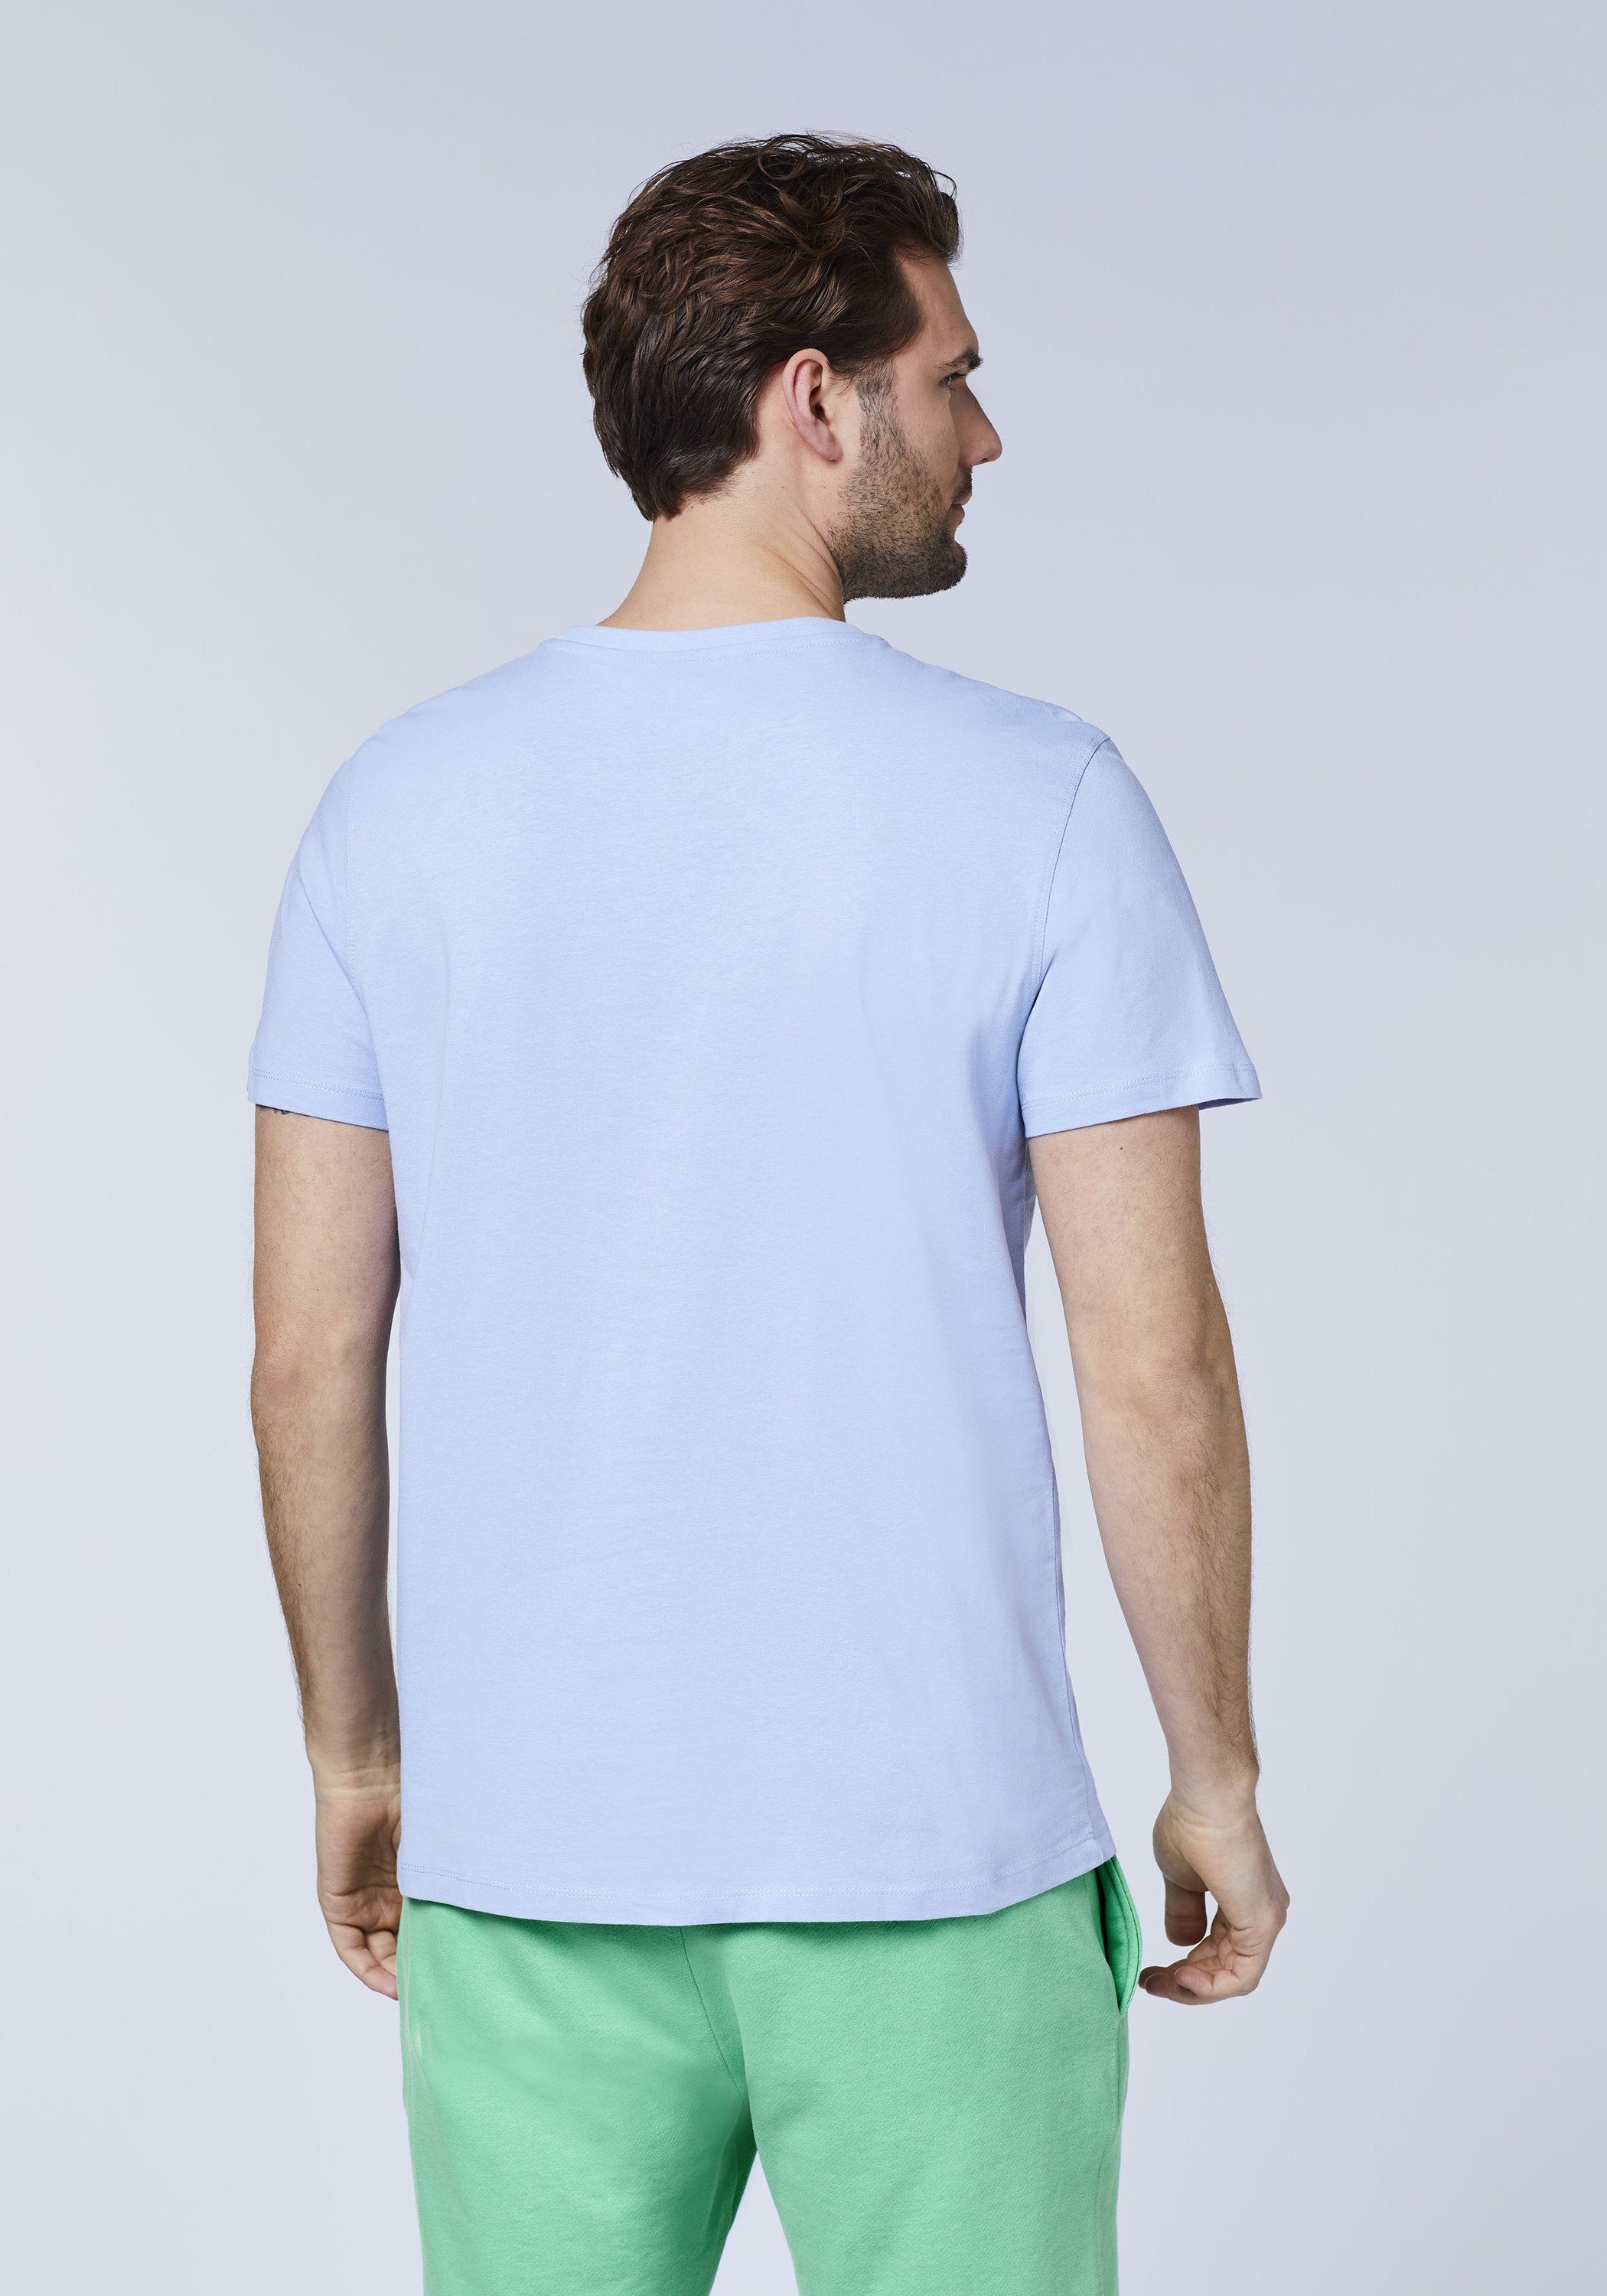 Polo Sylt Print-Shirt auffälligem 16-3922 Blue Brunnera Logo-Print mit